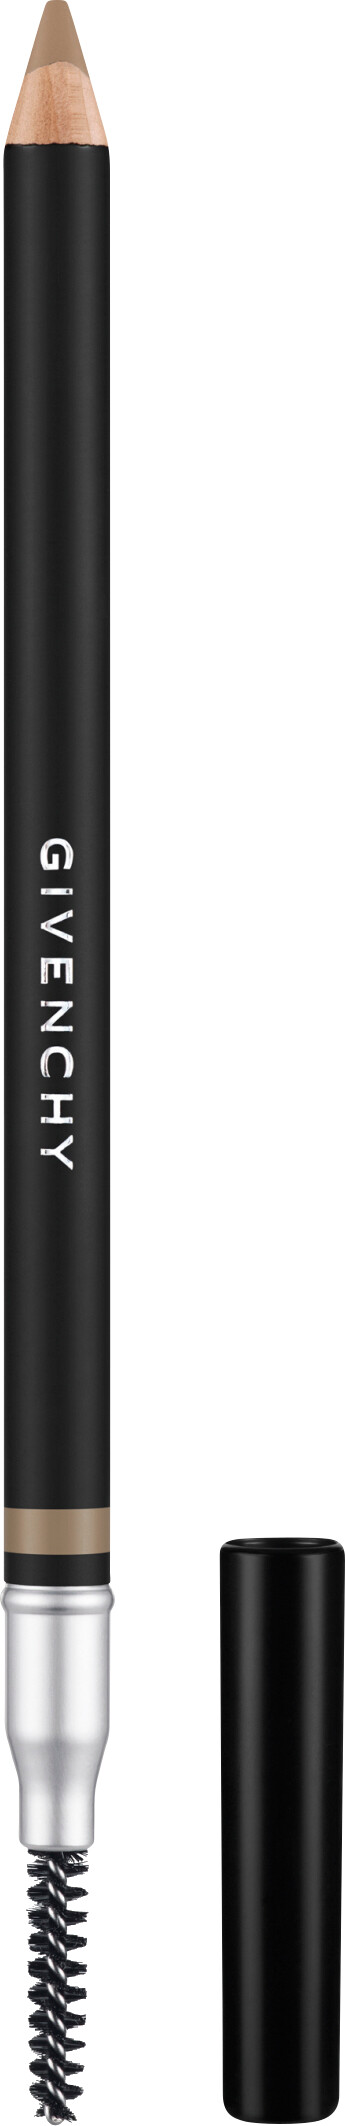 GIVENCHY Mister Eyebrow Powder Pencil 1.8g 01 - Light